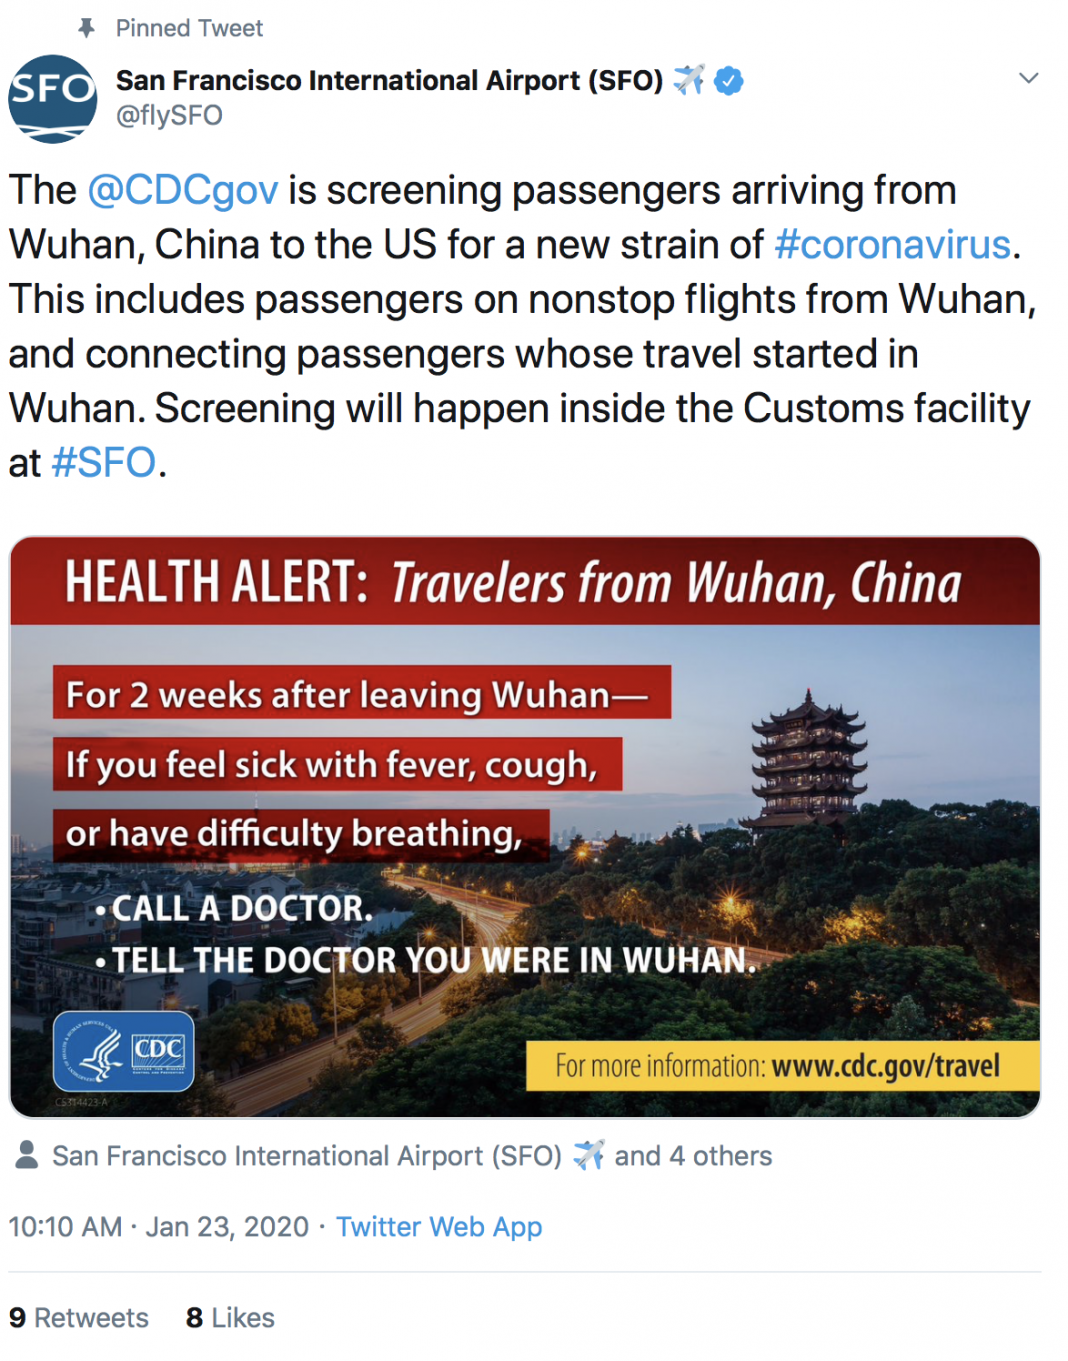 San Francisco International Airport posts health warnings regarding the Novel Coronavirus.